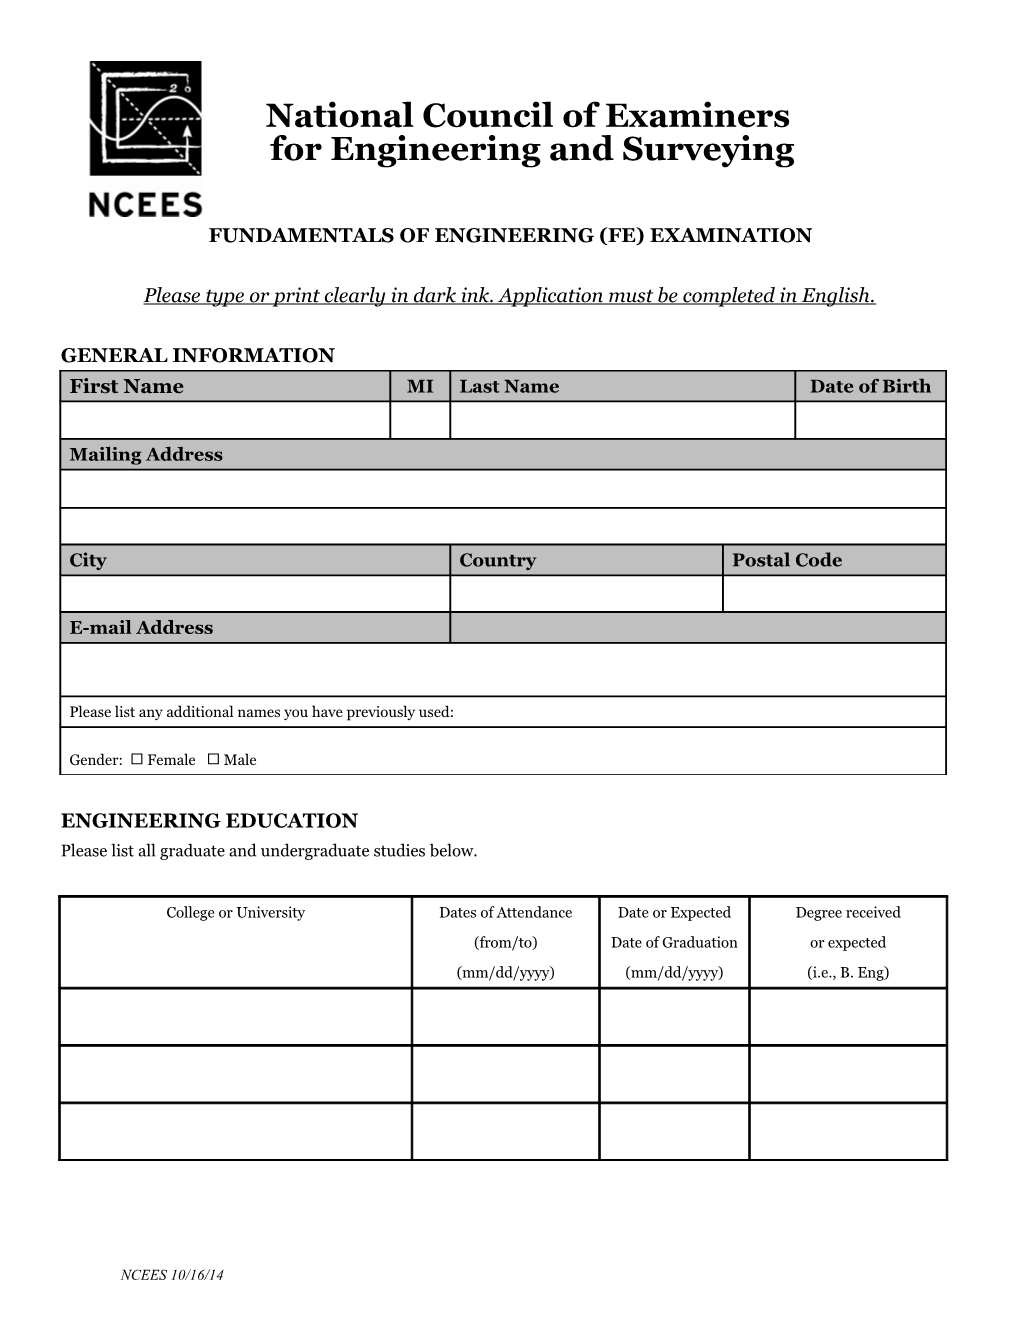 Fundamentals of Engineering (Fe) Examination